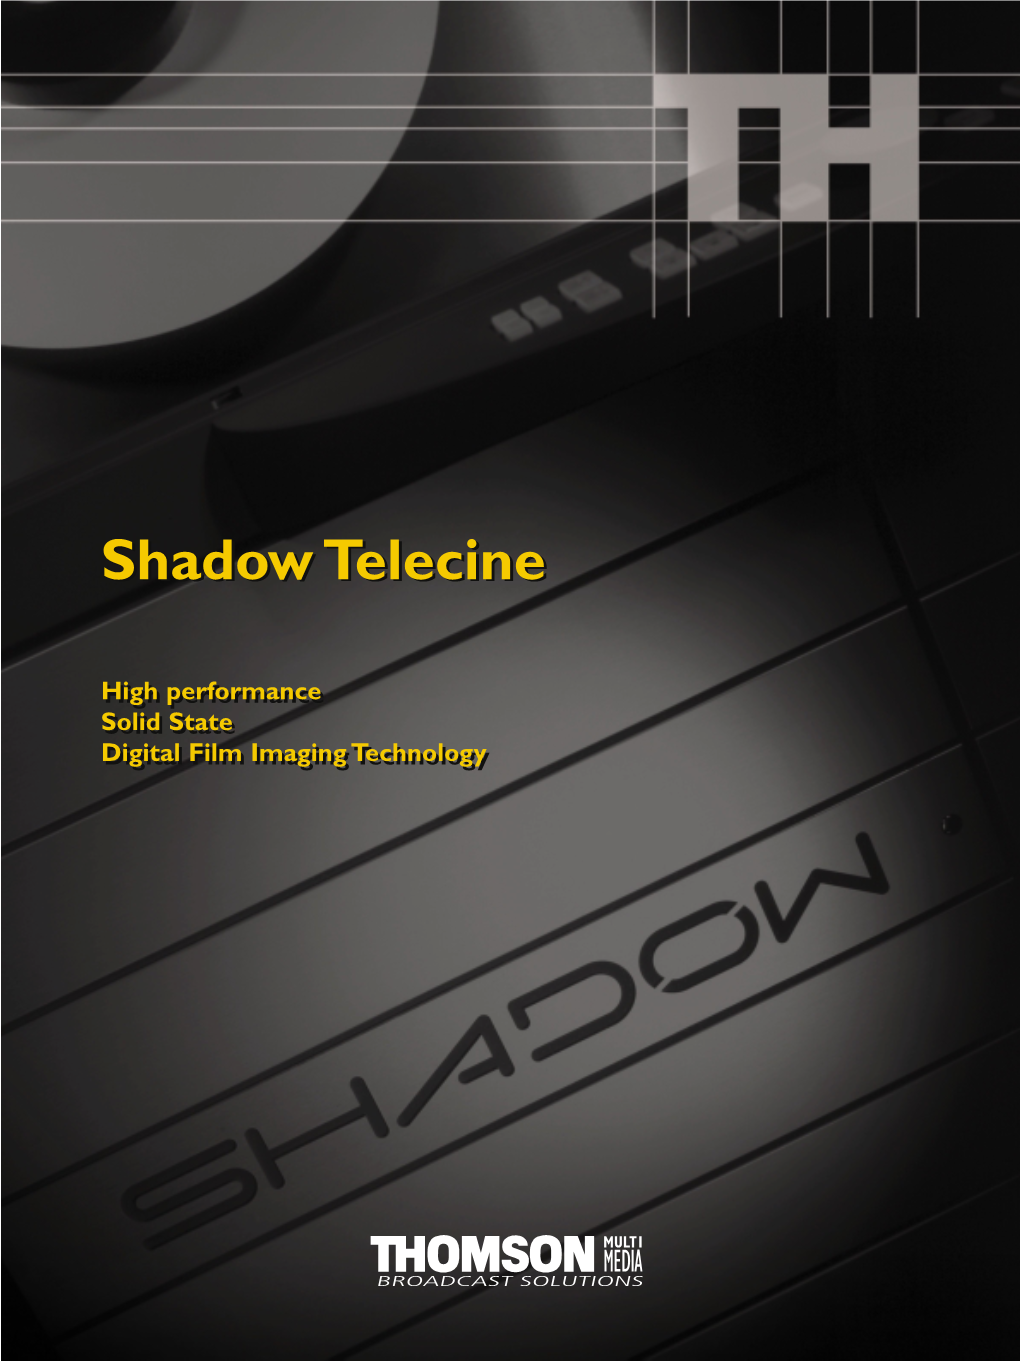 Shadow Telecinetelecine